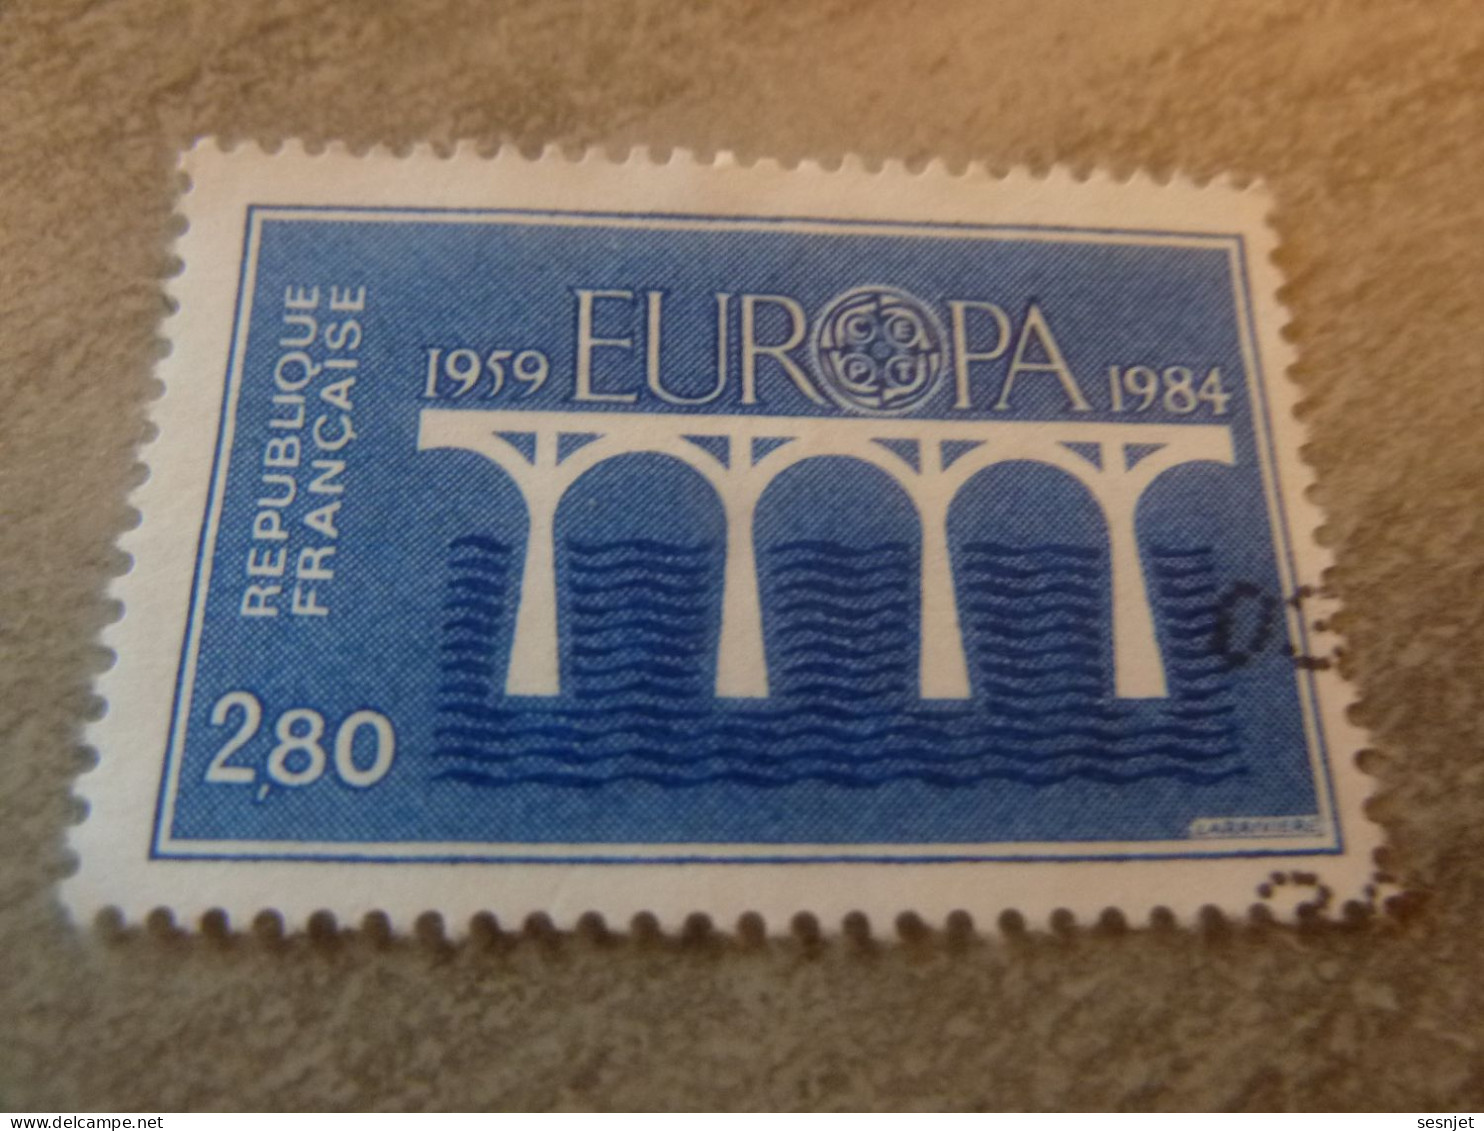 Europa - Conférence Européenne - 2f.80 - Yt 2310 - Bleu - Oblitéré - Année 1984 - - 1984